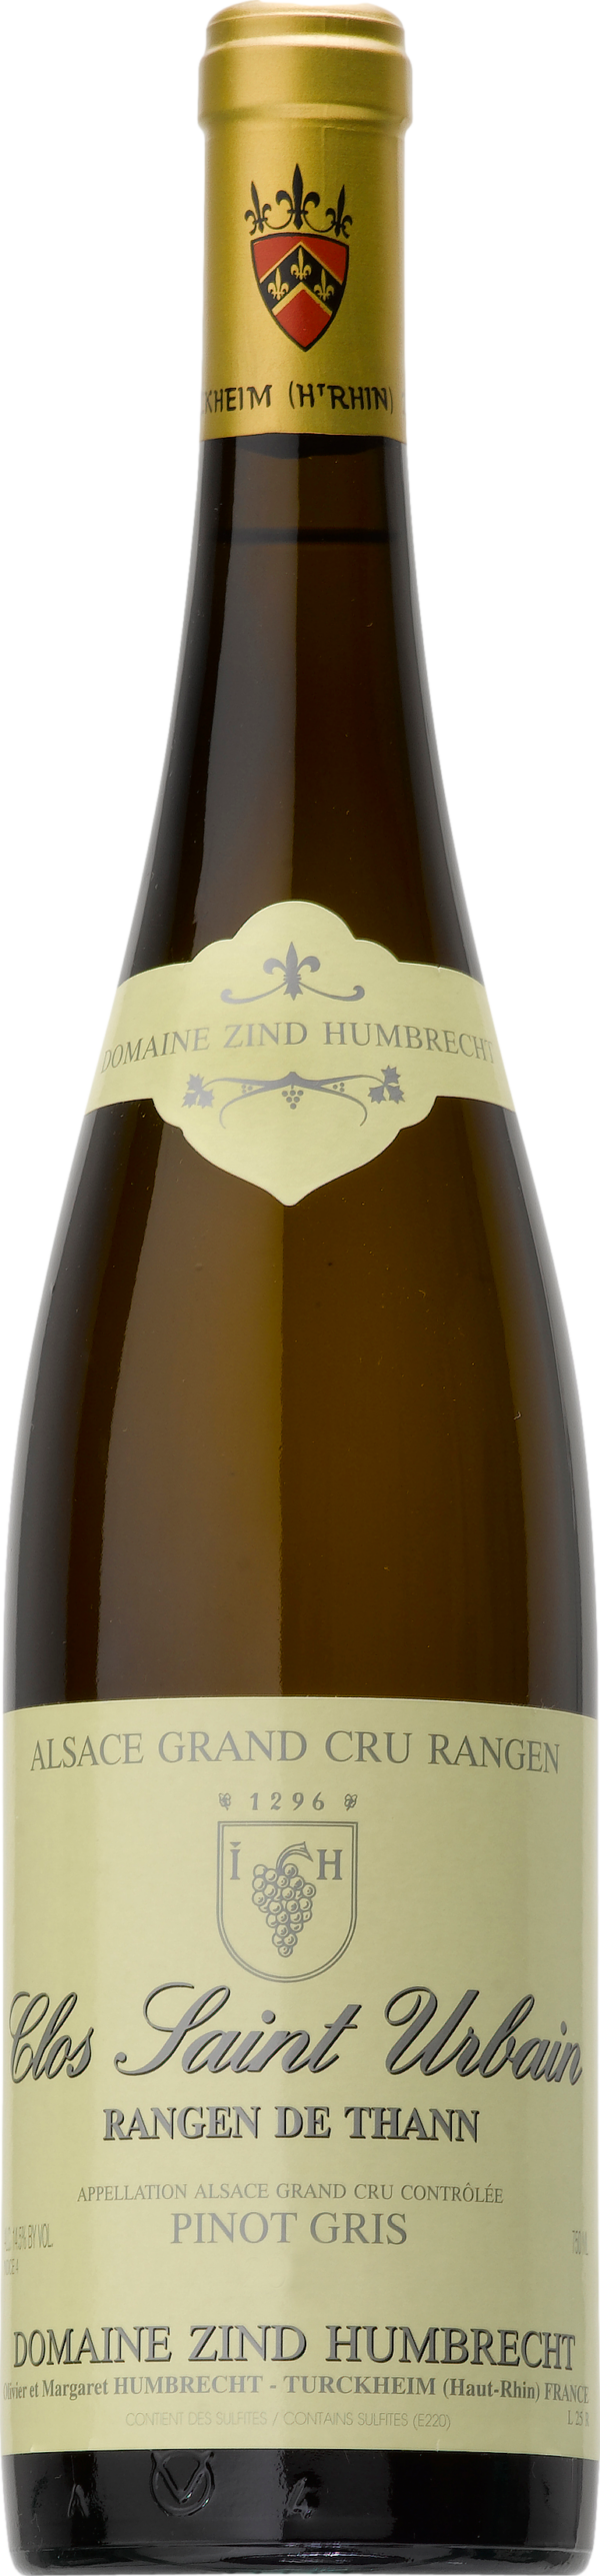 Product image of Domaine Zind-Humbrecht Pinot Gris Grand Cru Rangen de Thann Clos Saint Urbain 2016 from 8wines